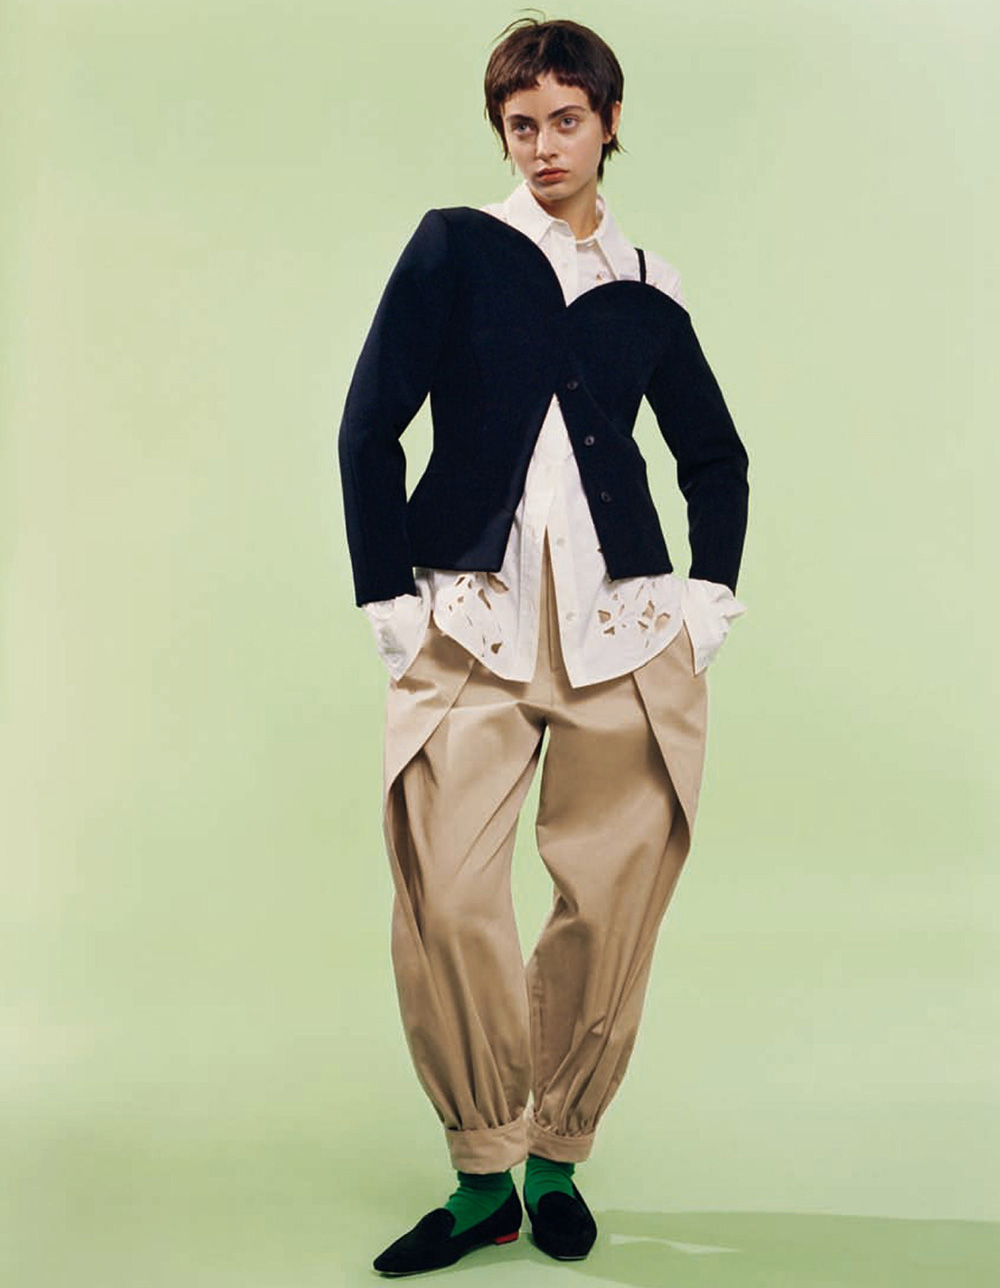 Patrycja Piekarska by Allyssa Heuze for Vogue China January 2021